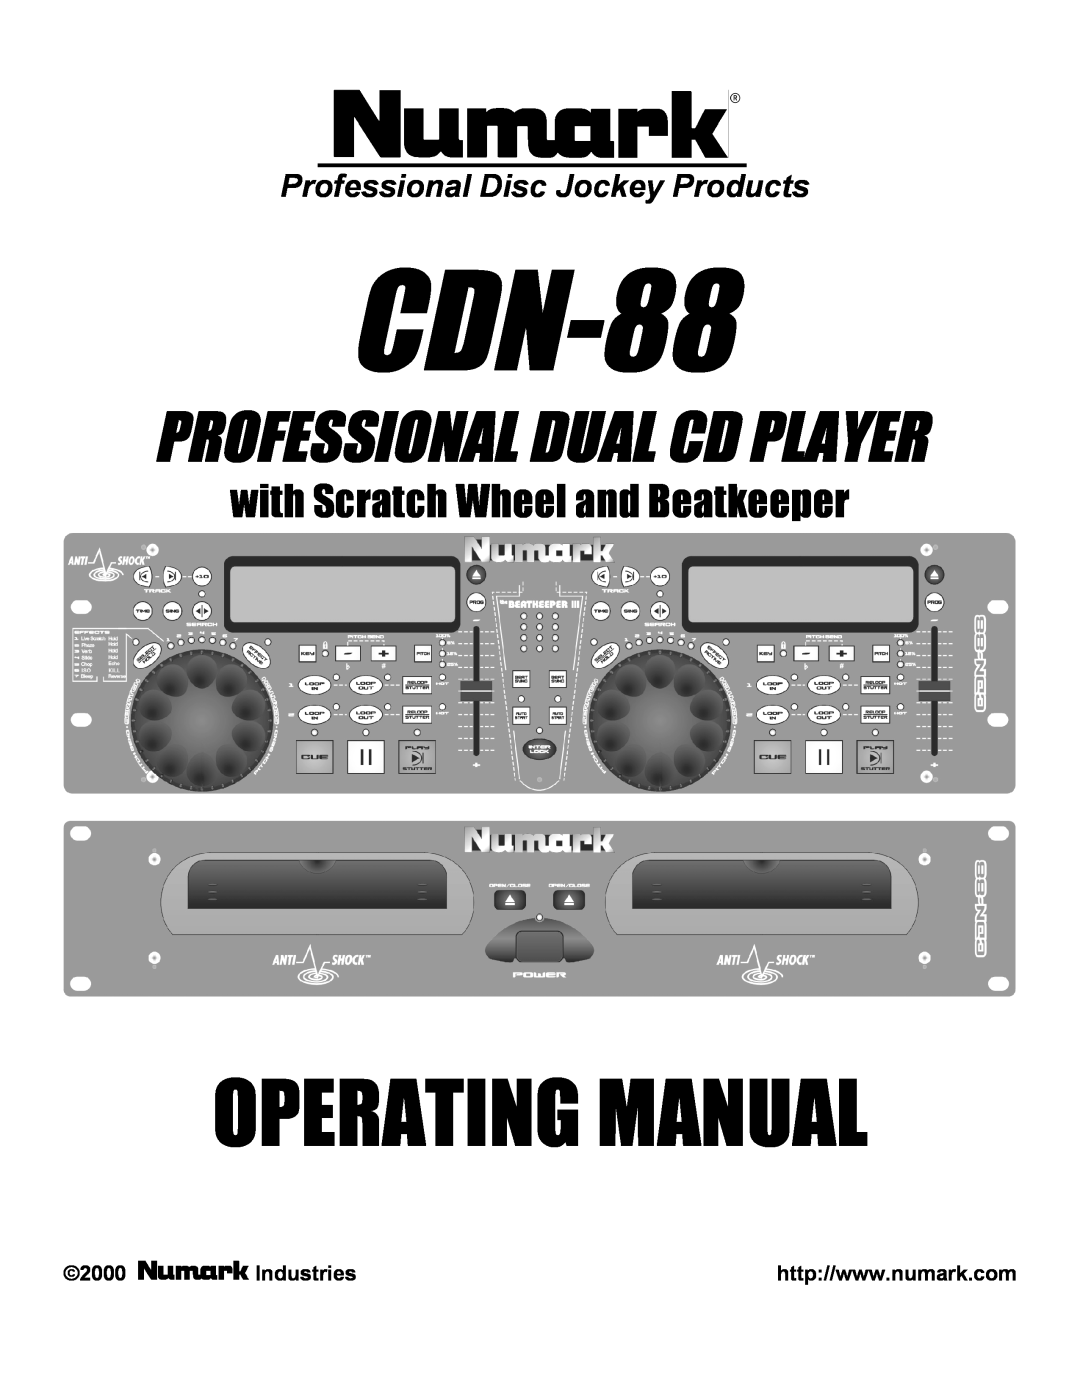 Numark Industries CDN-88 manual Professional Disc Jockey Products, 2000Industries, Operating Manual 